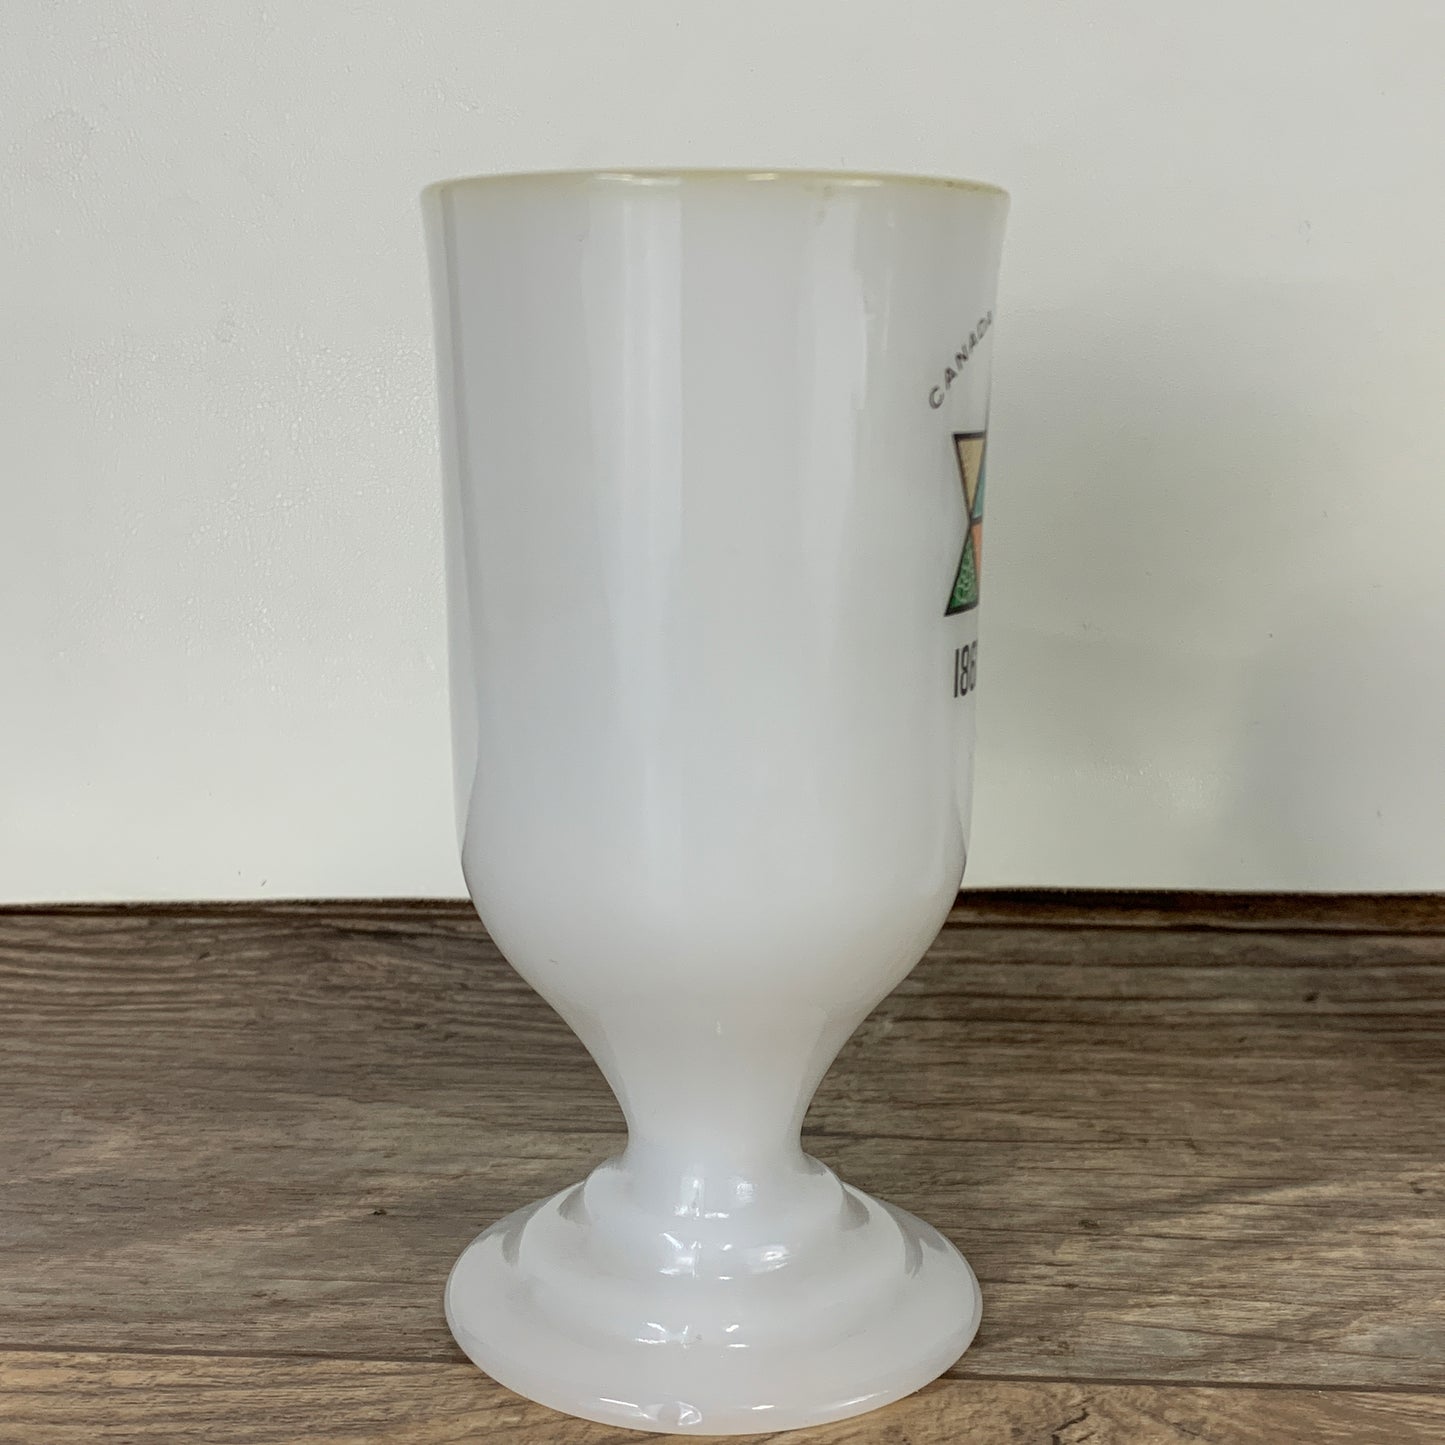 Canada Centennial Milk Glass Collectible Specialty Coffee Mugs 1867 - 1967 Set of 2